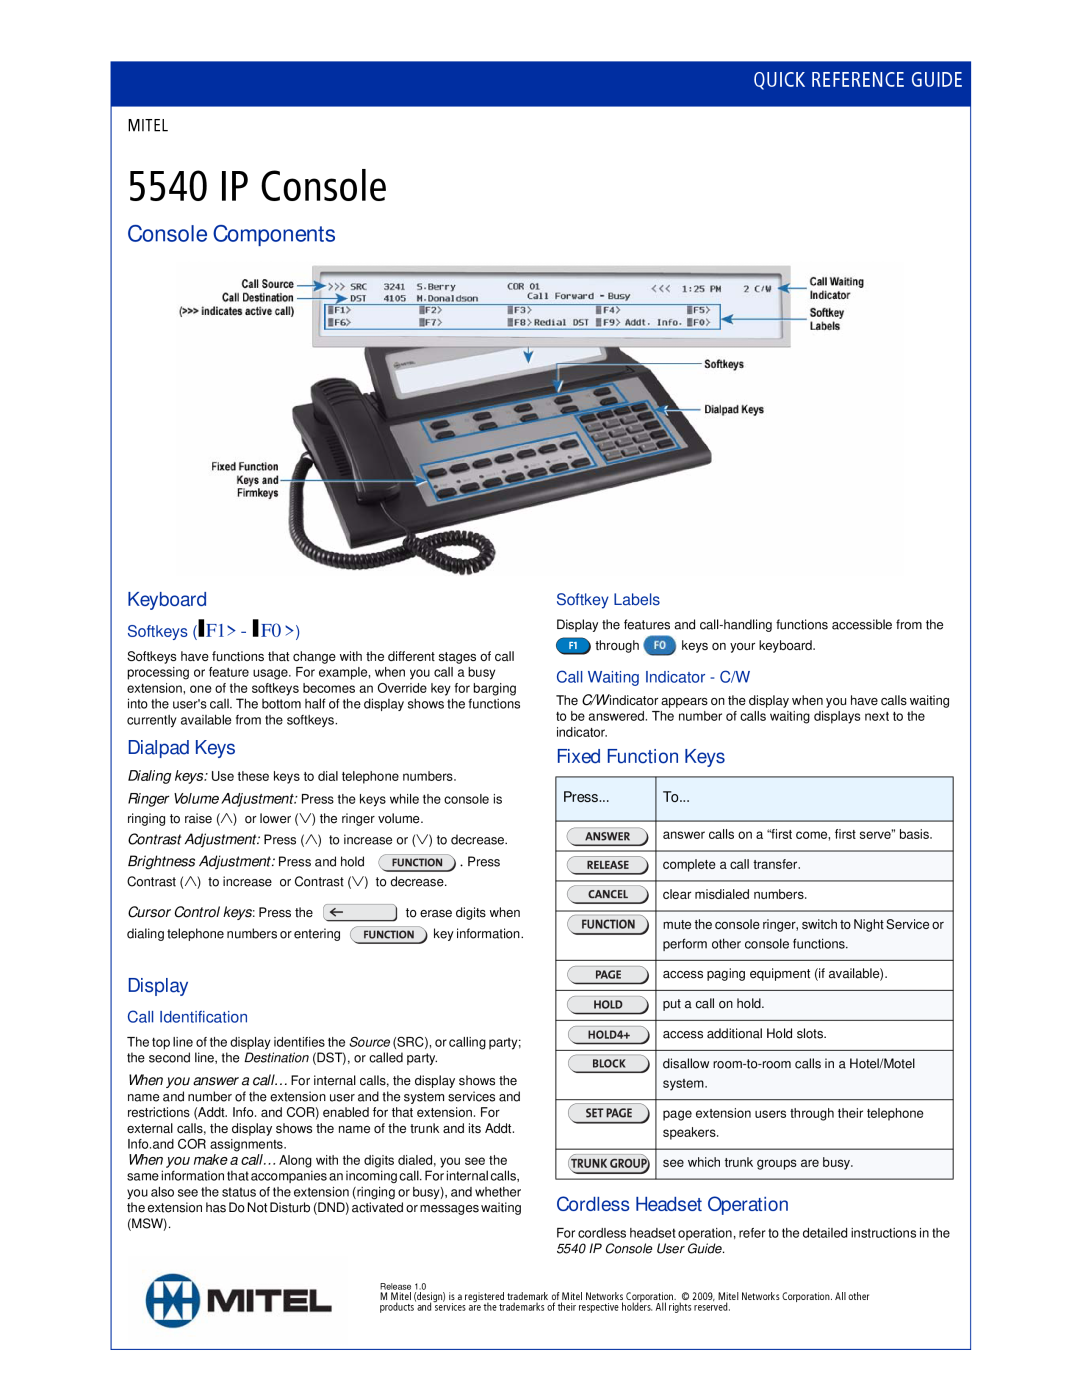 Mitel 5540 manual Console Components, Keyboard, Dialpad Keys, Display, Fixed Function Keys, Cordless Headset Operation 